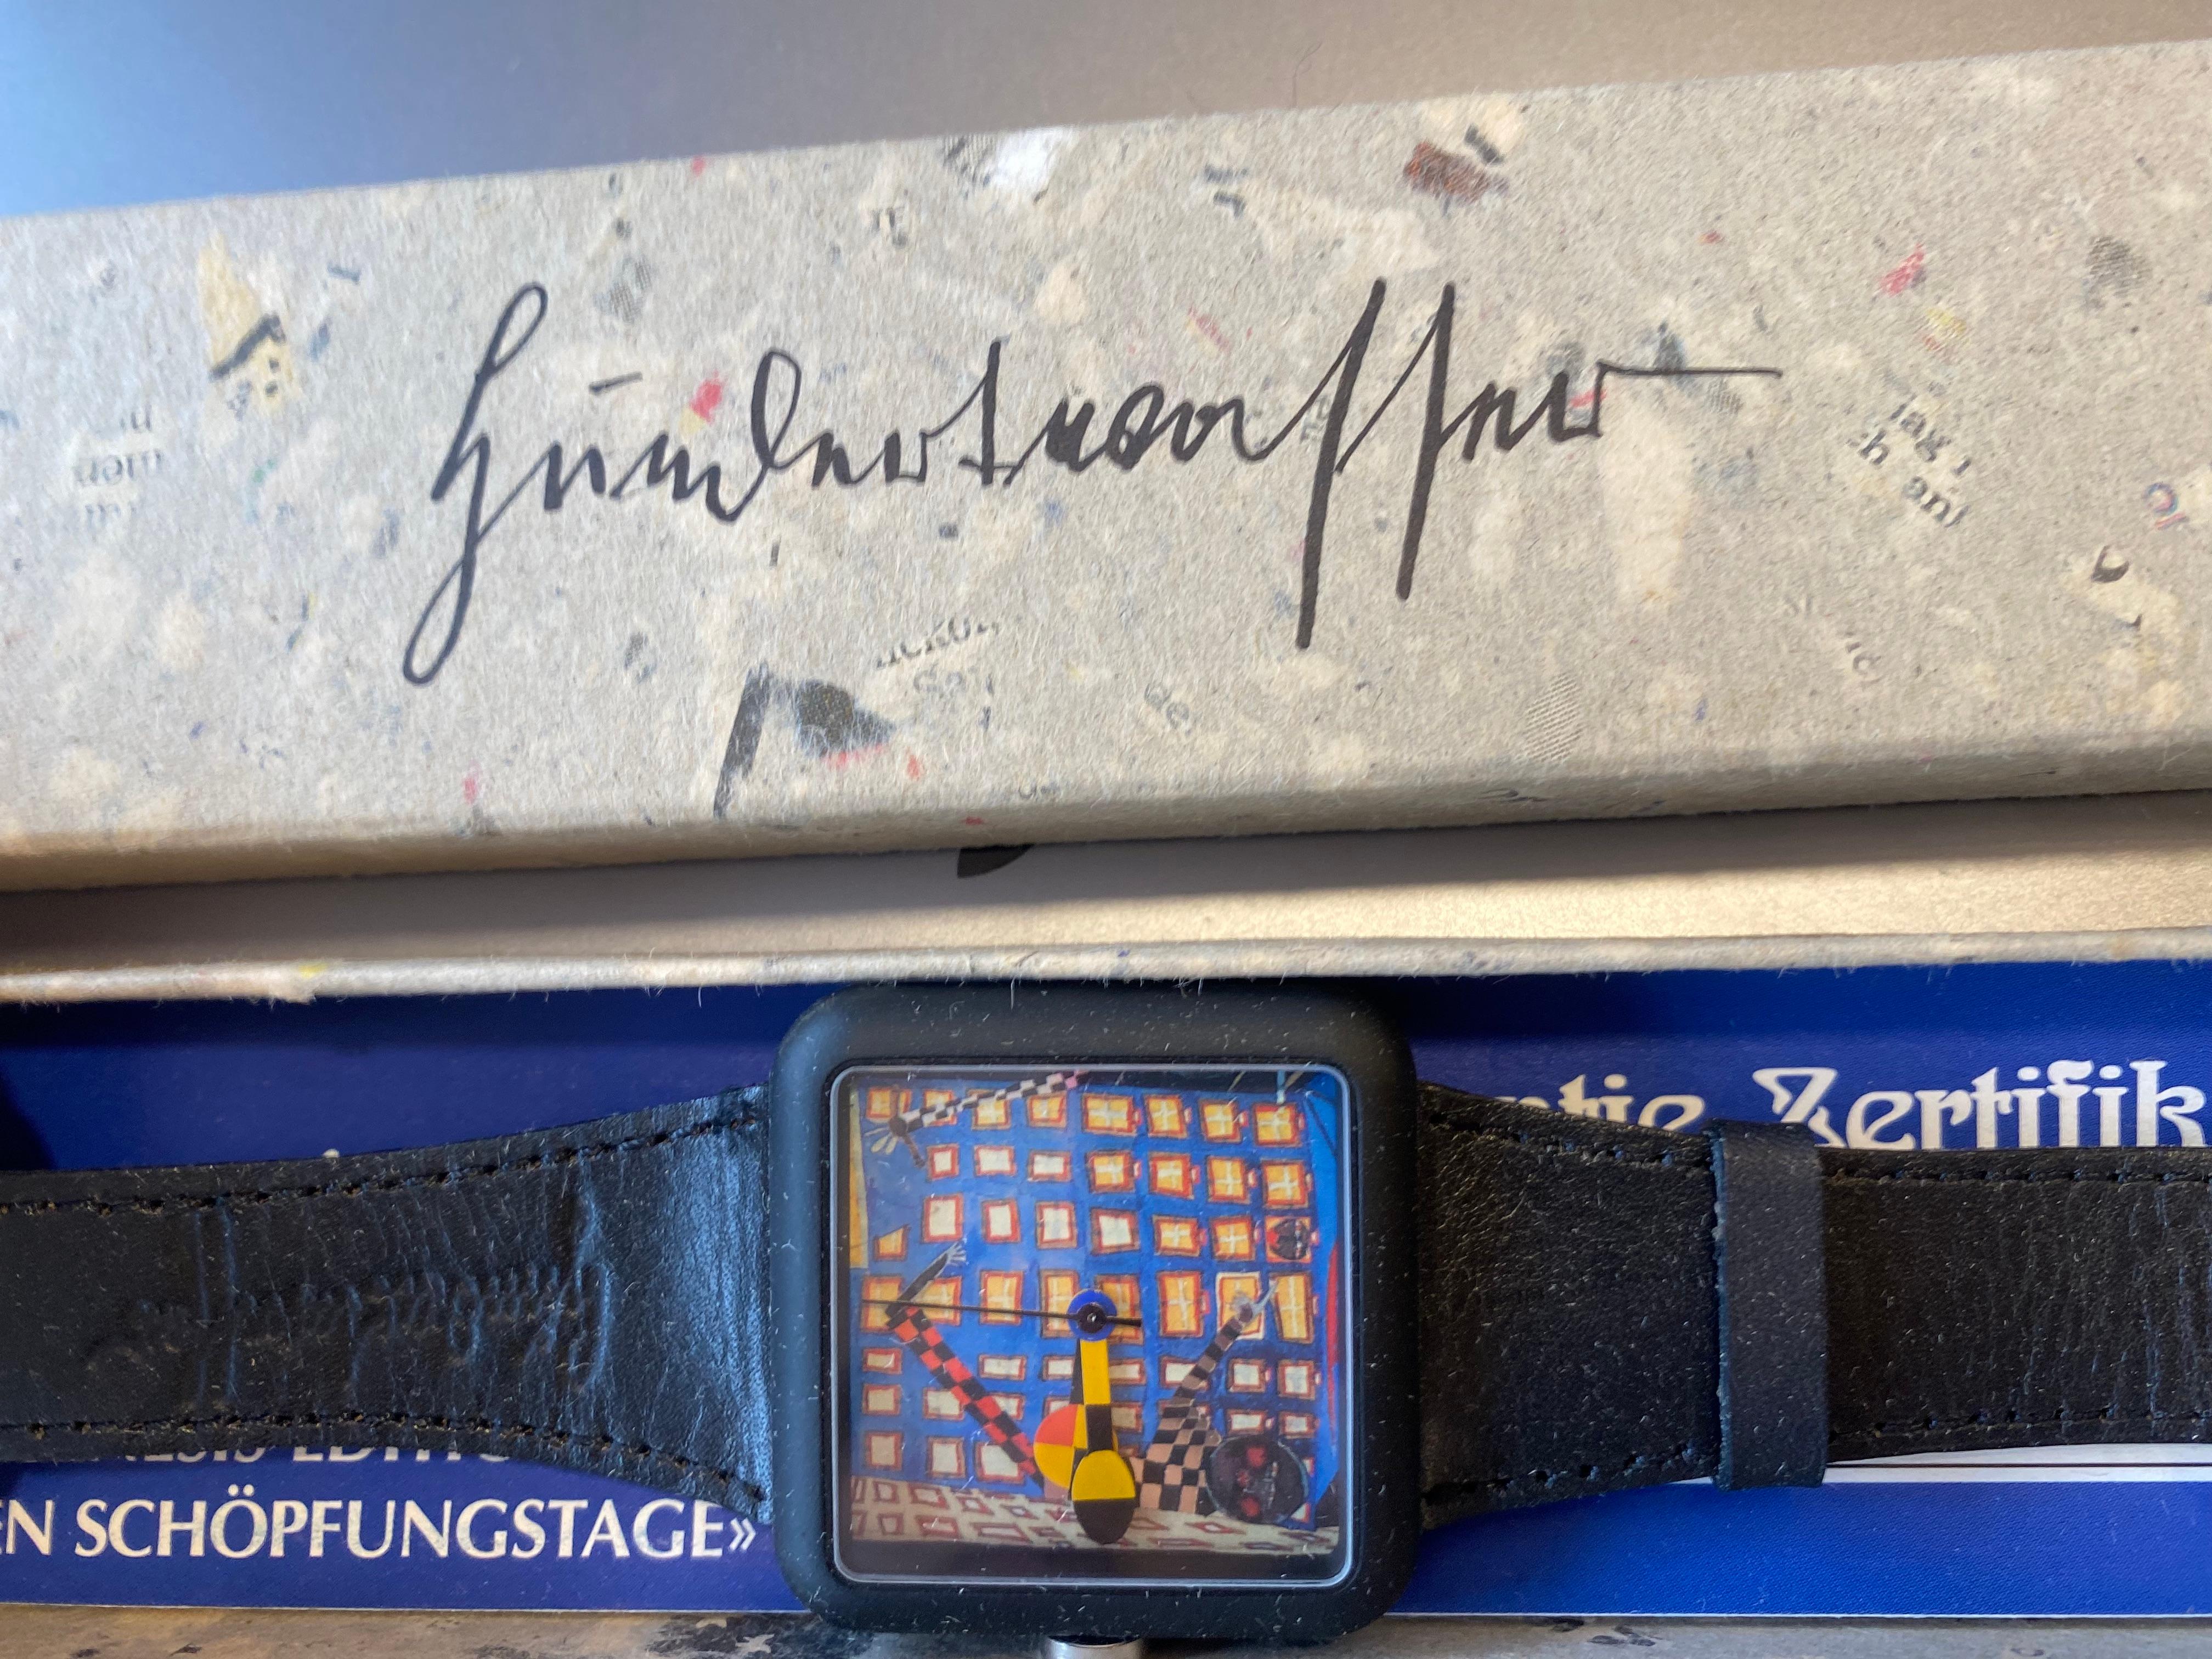 Watch Designed by the Austrian Artist Hundertwasser, 1995 In Good Condition For Sale In Saint ouen, FR